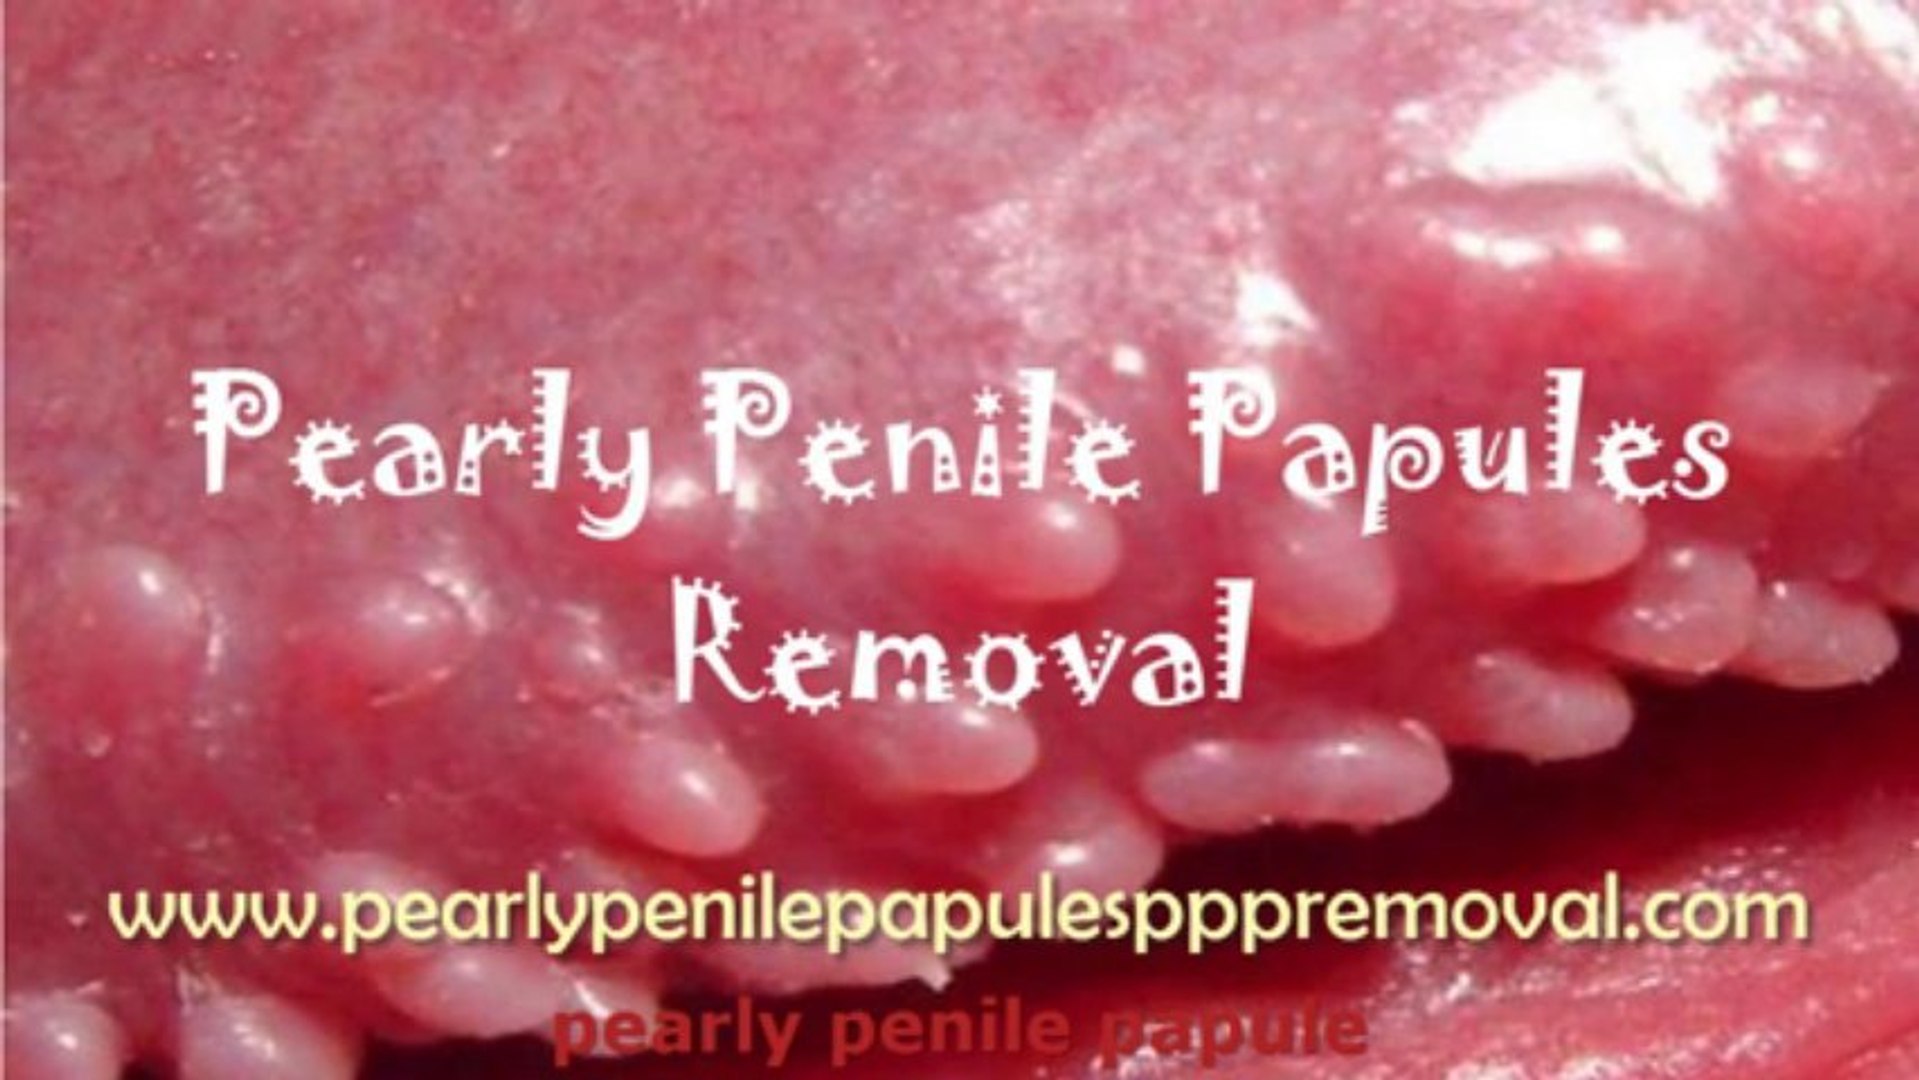 Natural penile treatment papules Pearly penile